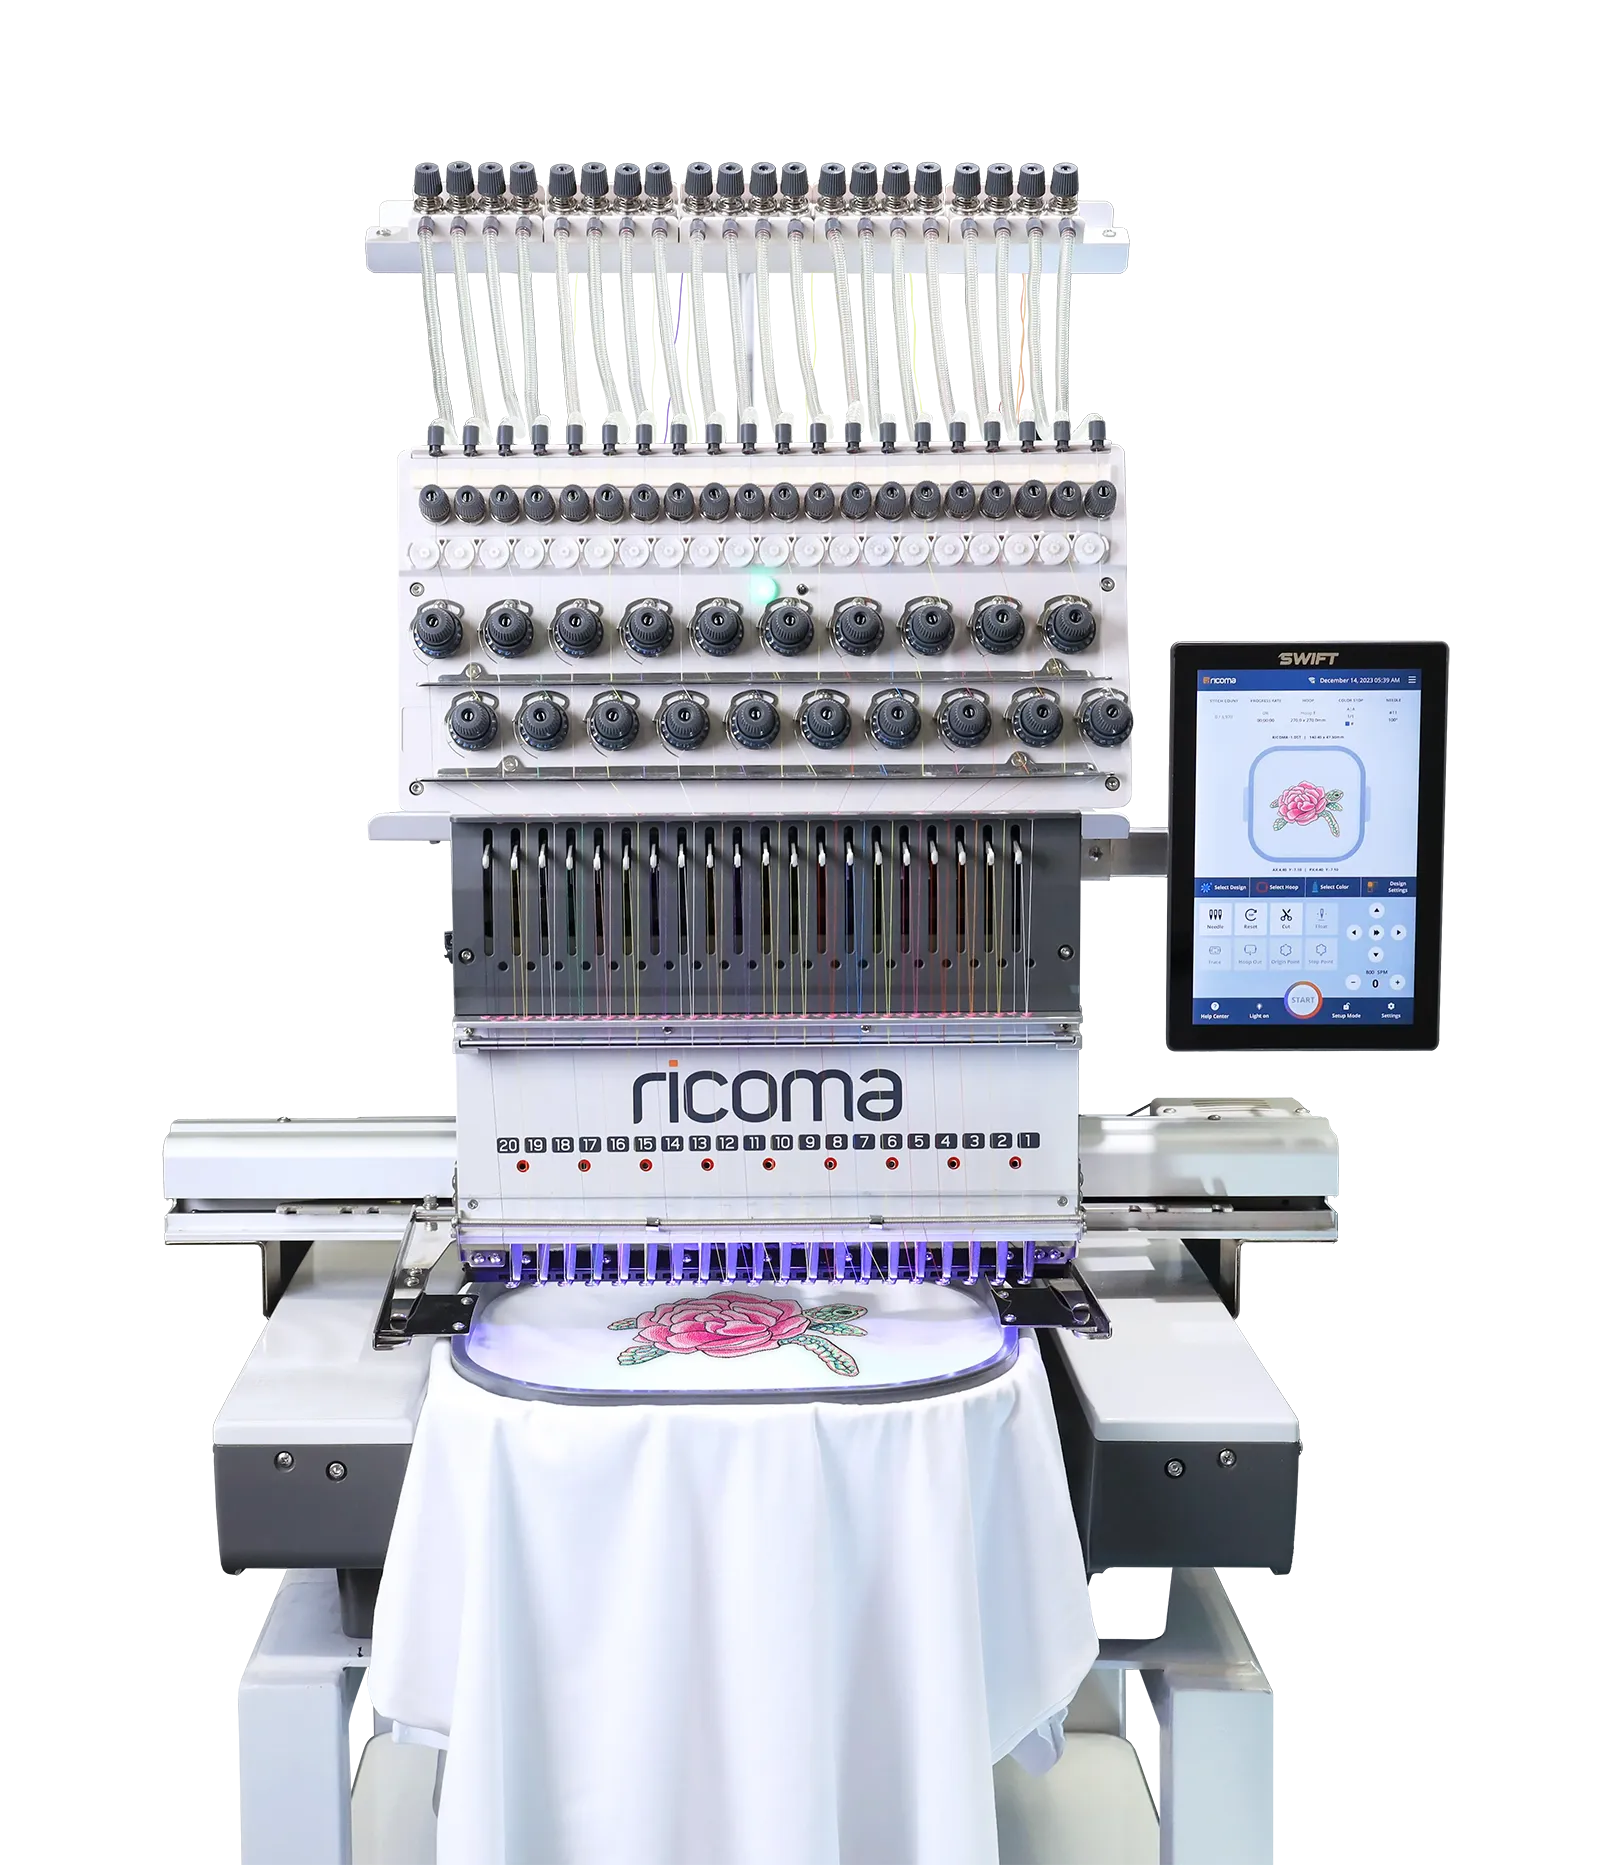 Ricoma Embroidery Machine, 220 - 350 V Ac, Model: SWD 1201 - 08s